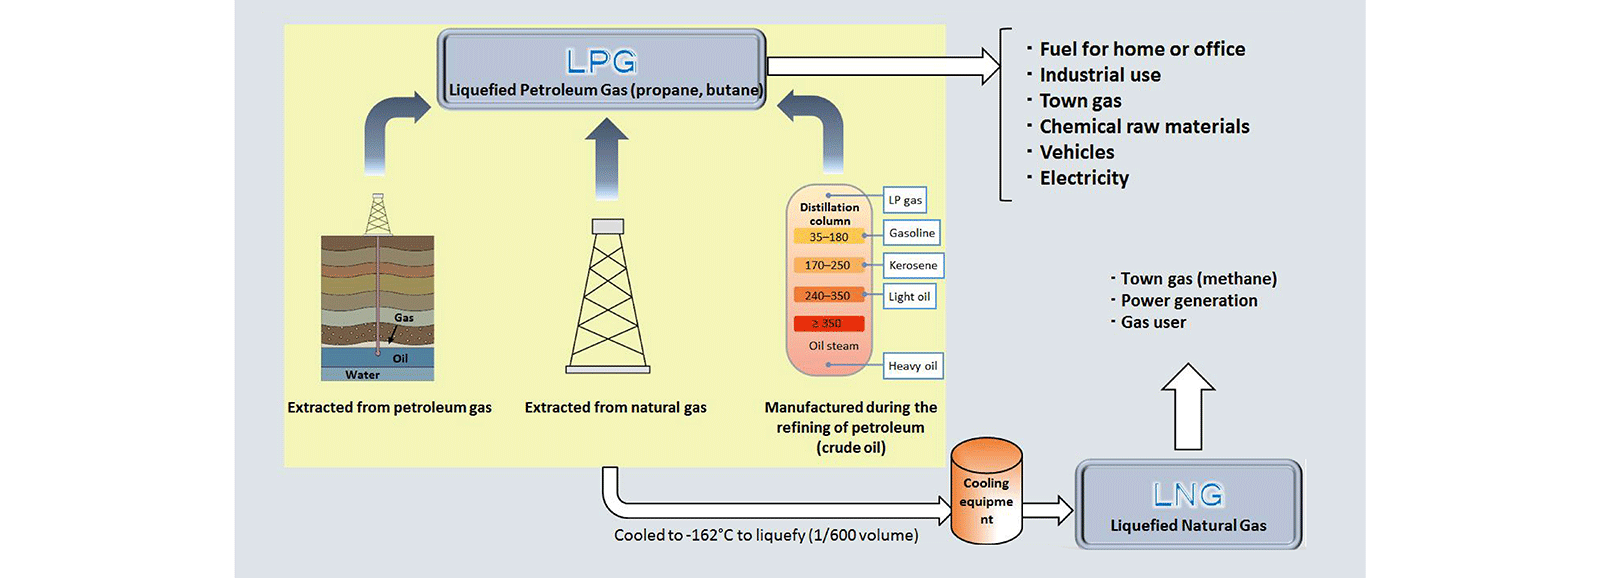 Liquefied natural gas (LNG) - Liquefied petroleum gas (LPG)